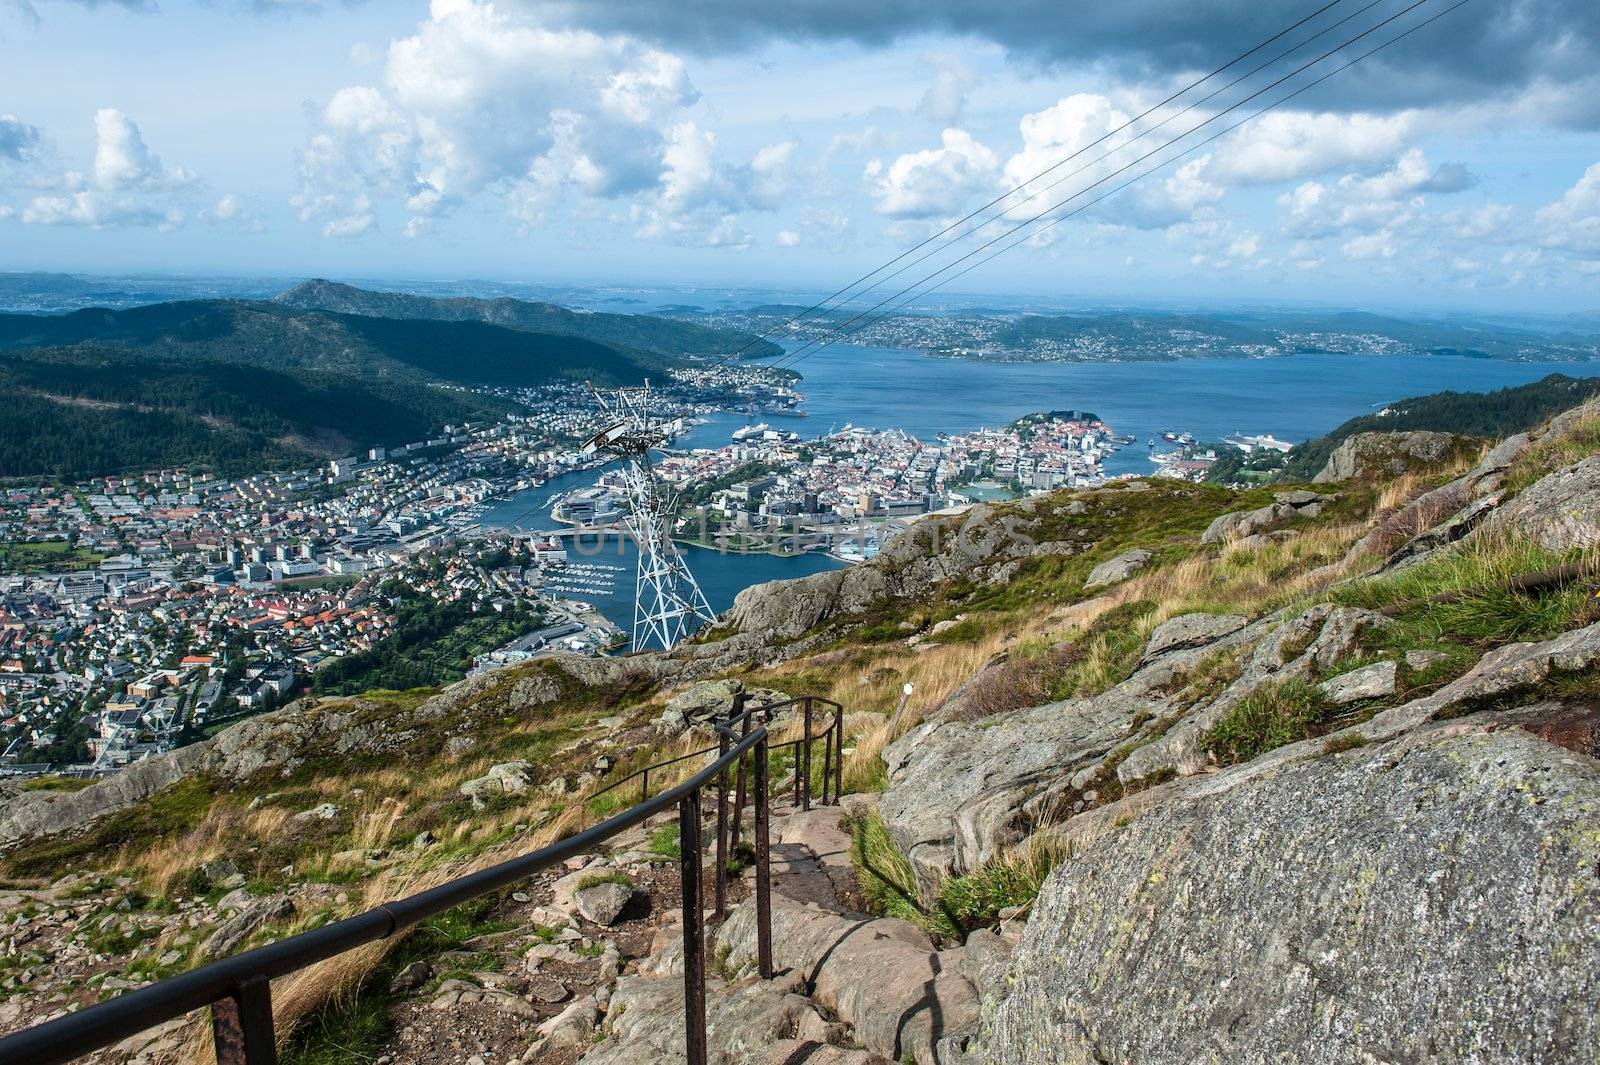 View from mount Ulriken near Bergen city in Norway